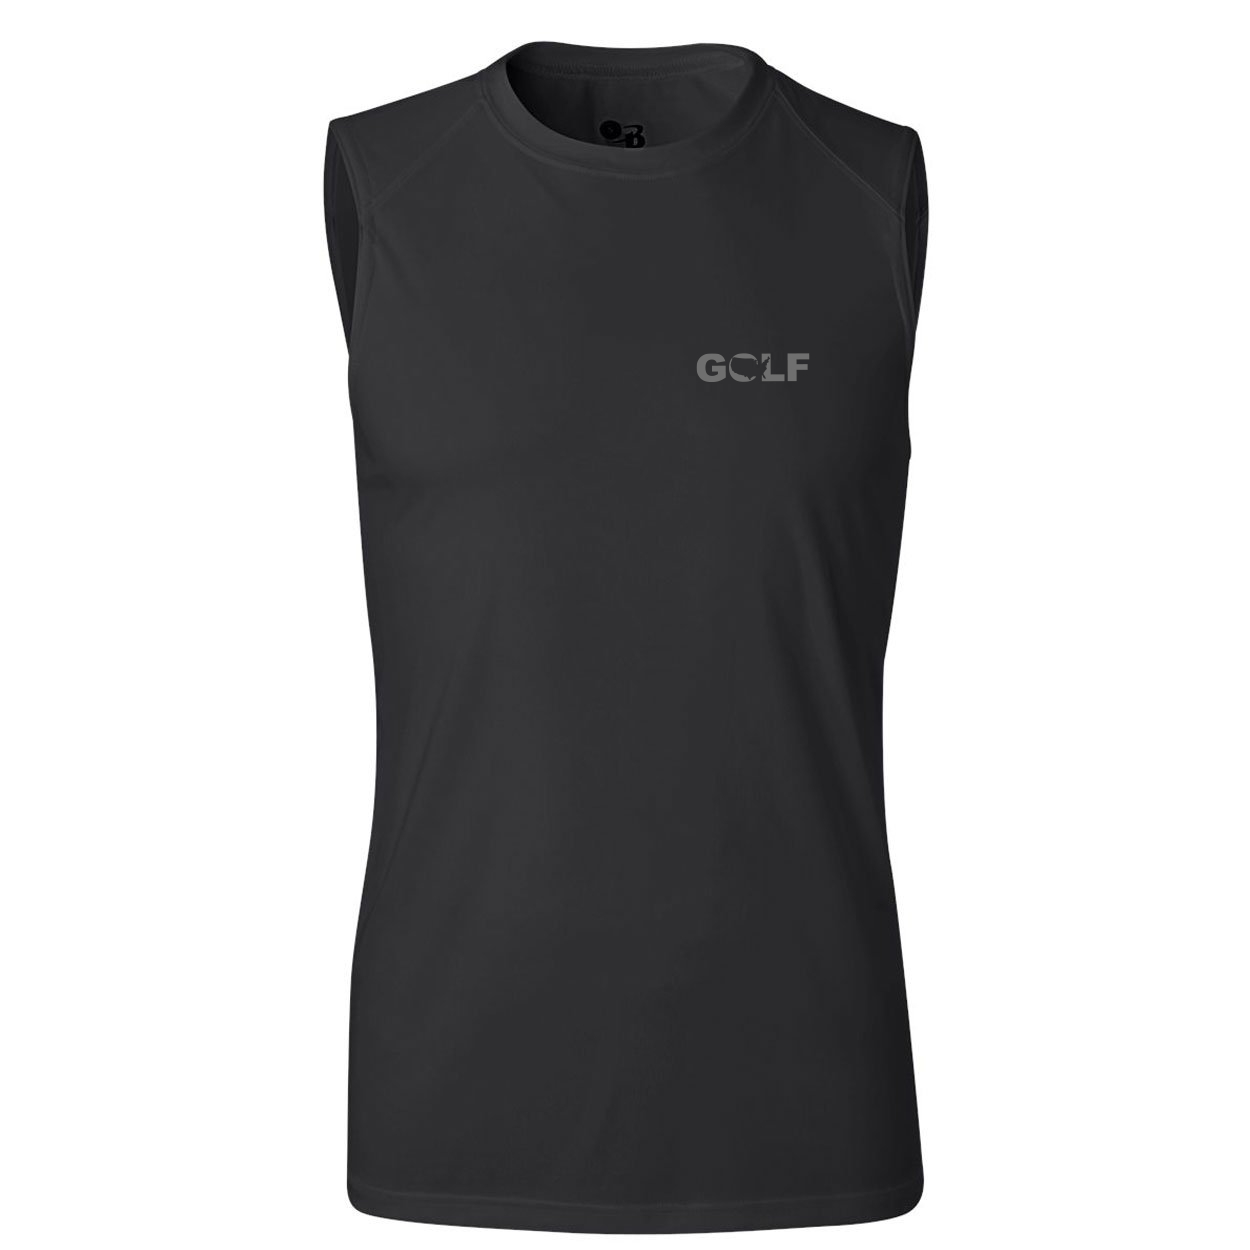 Golf United States Night Out Unisex Performance Sleeveless T-Shirt Black (Gray Logo)